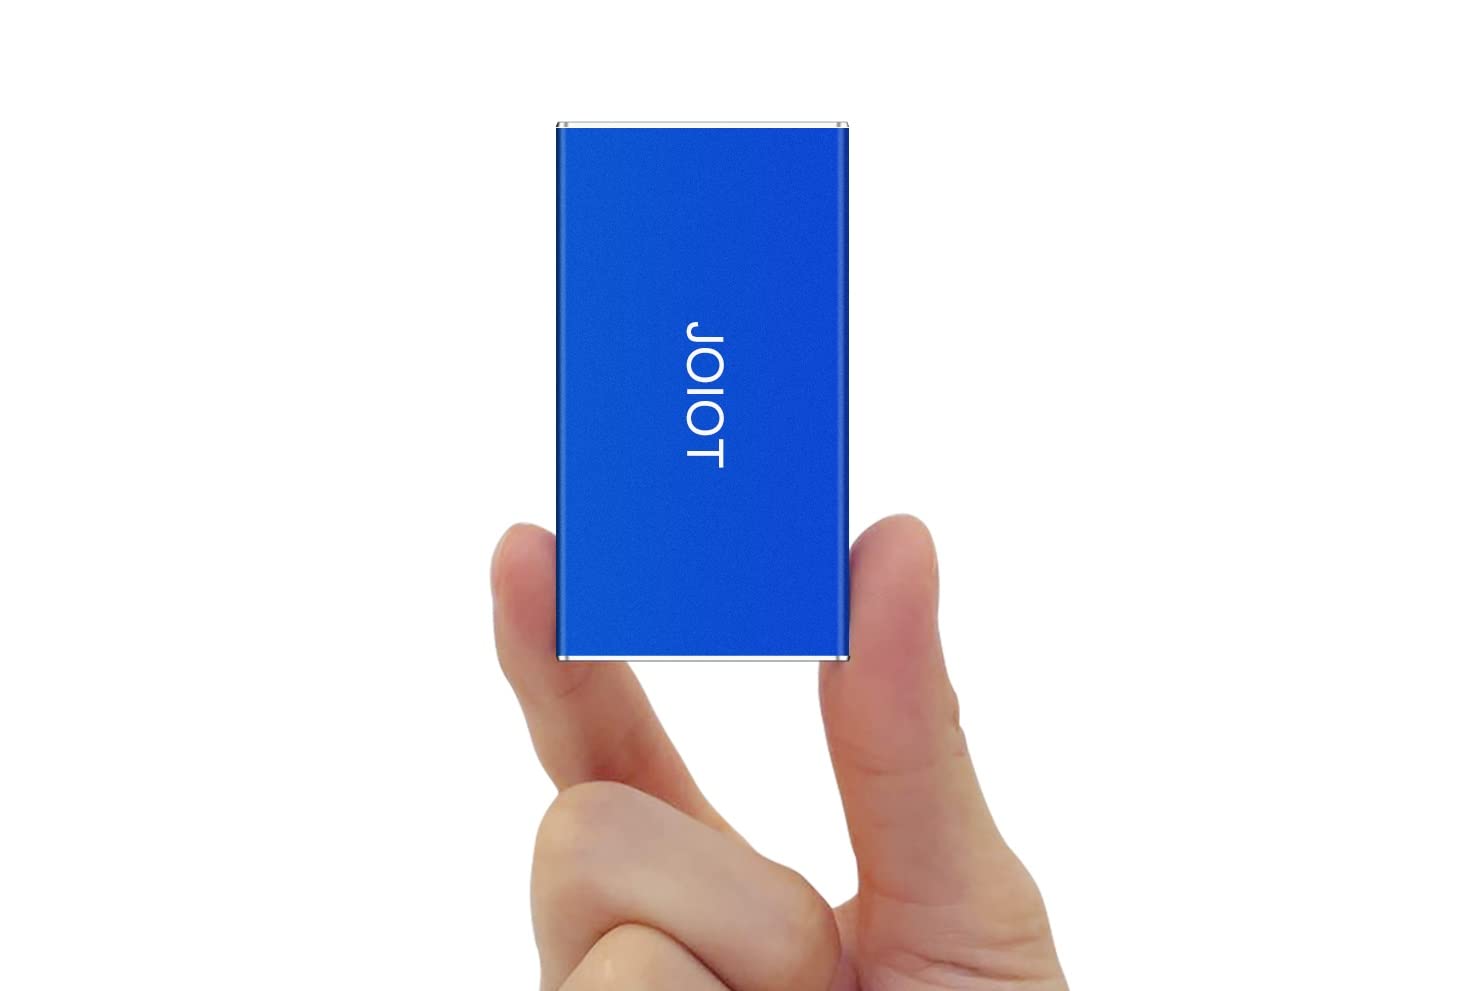 JOIOT Mini Portable SSD 500GB External Solid State Drive - Up to 540MB/s, USB 3.1 Gen 2 Ultra-Slim External SSD, Blue - 500GB